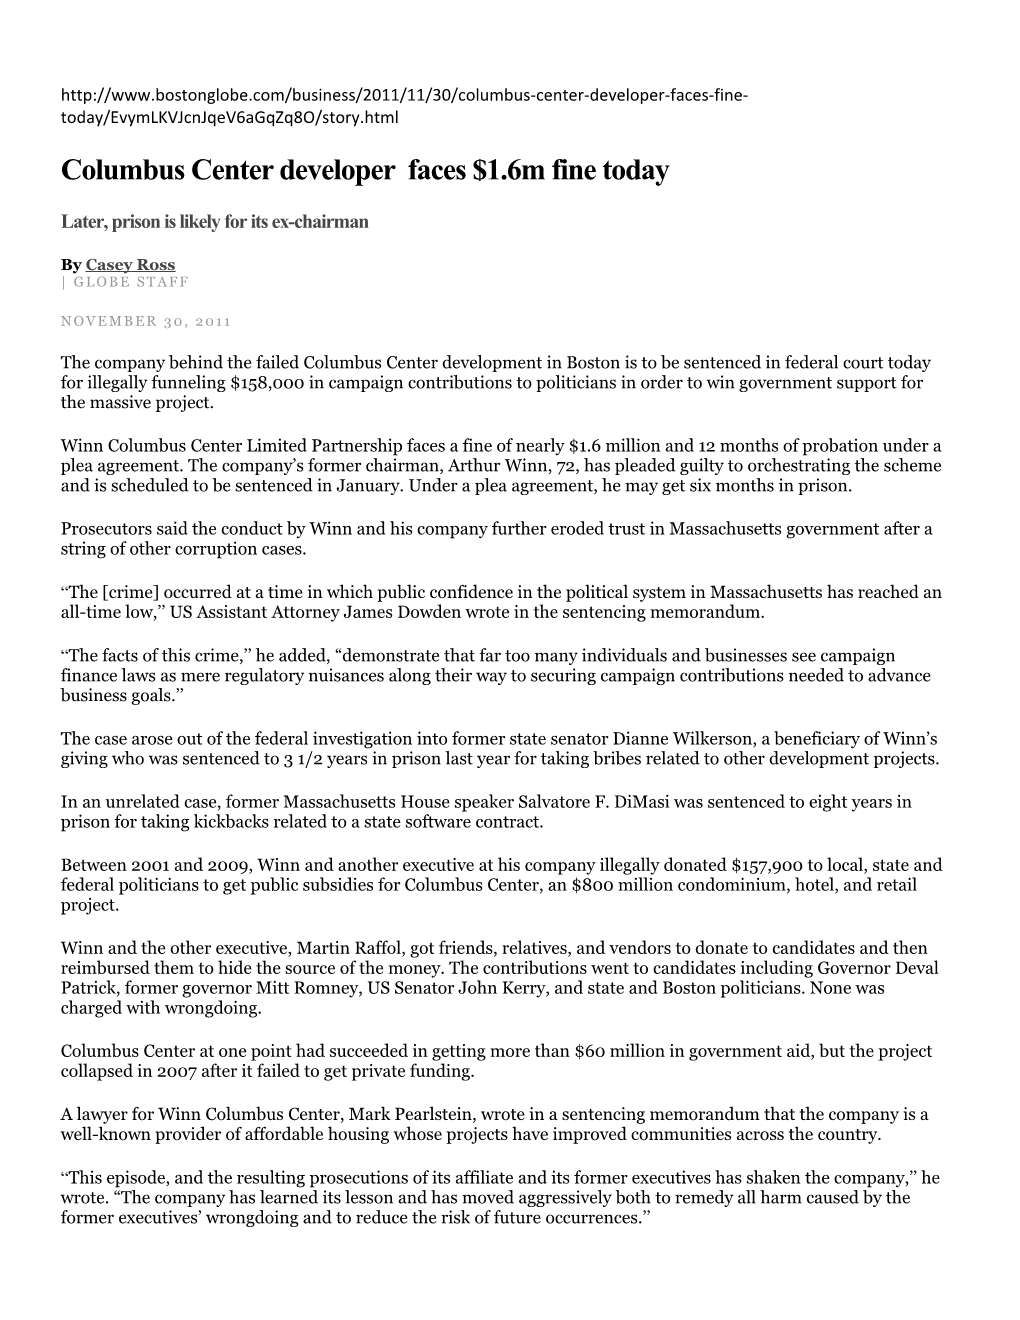 Columbus Center Developer Faces $1.6M Fine Today